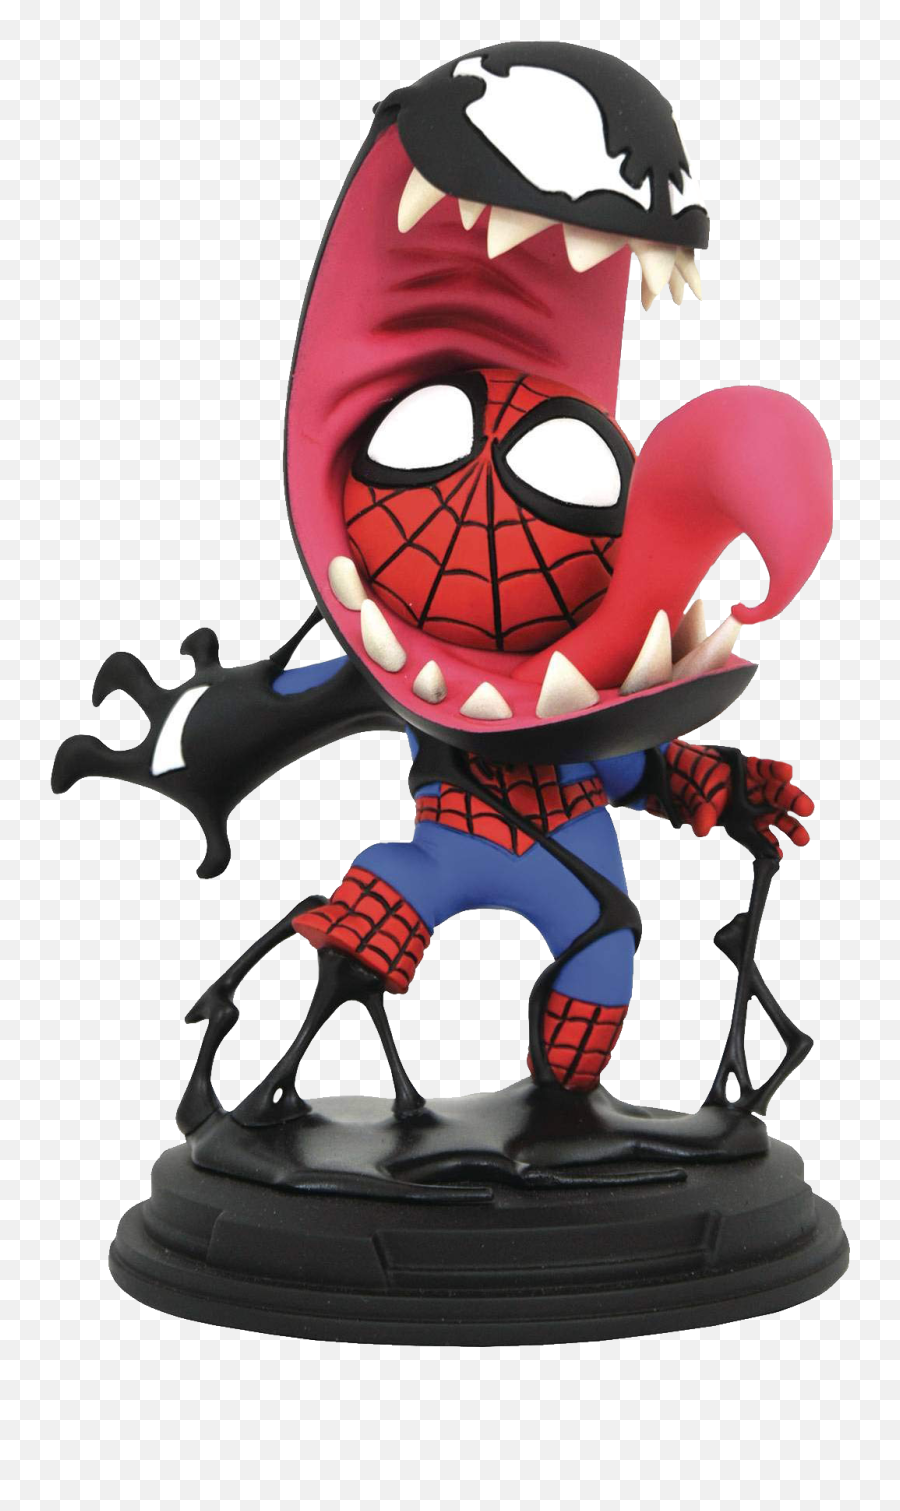 2020 Statue Awards U2013 Bmuthacom - Figurine Venom Spiderman Emoji,What Emotion Does Scarlet Red Represent